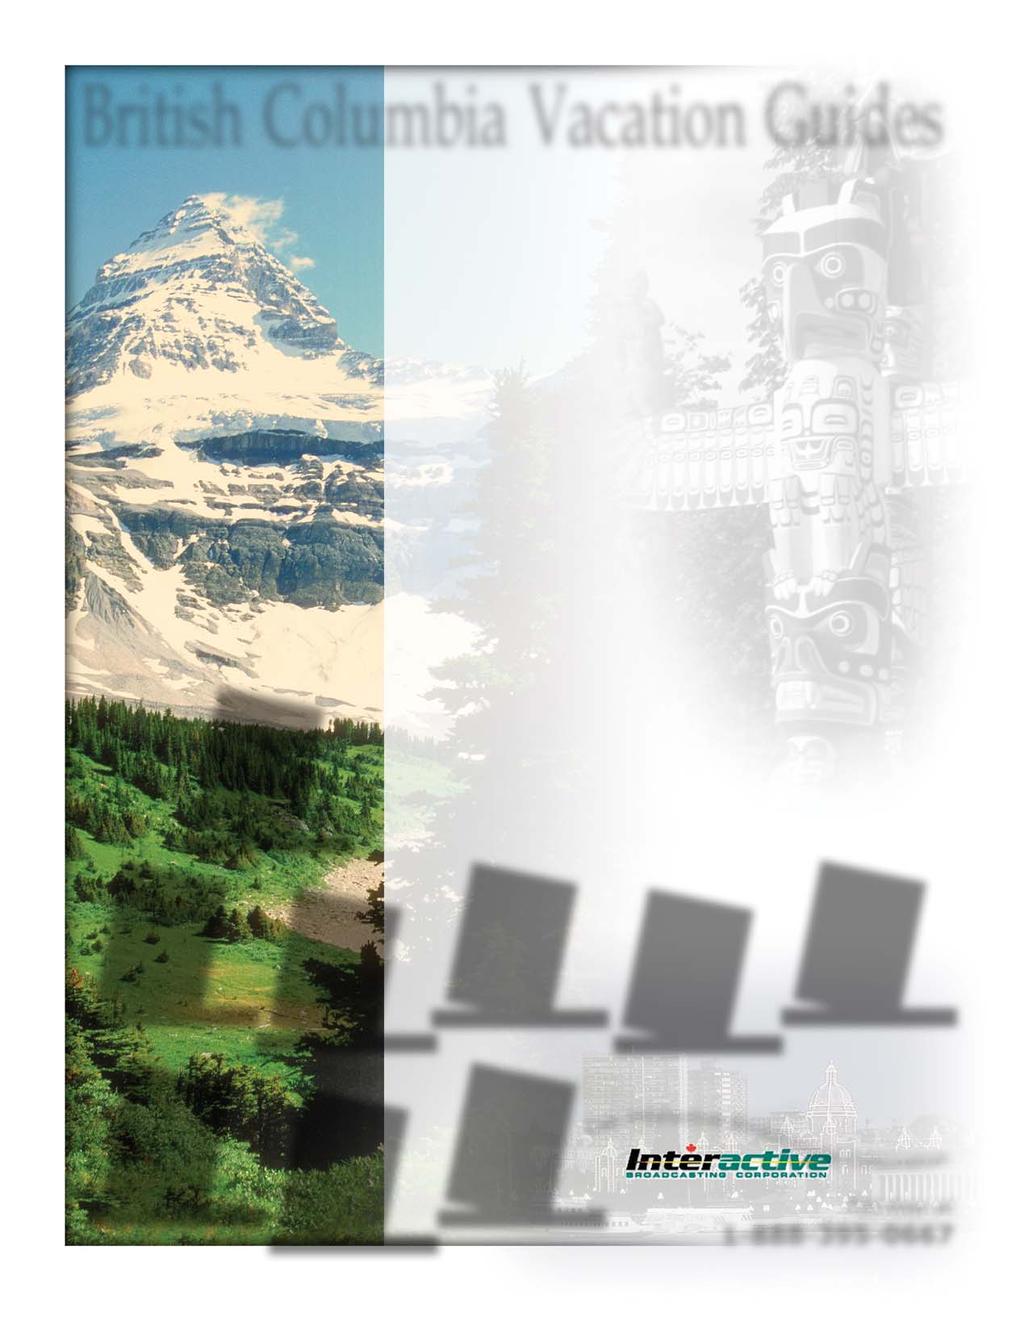 Call Interactive Broadcasting Corporation British Columbia Vacation Guides Digital